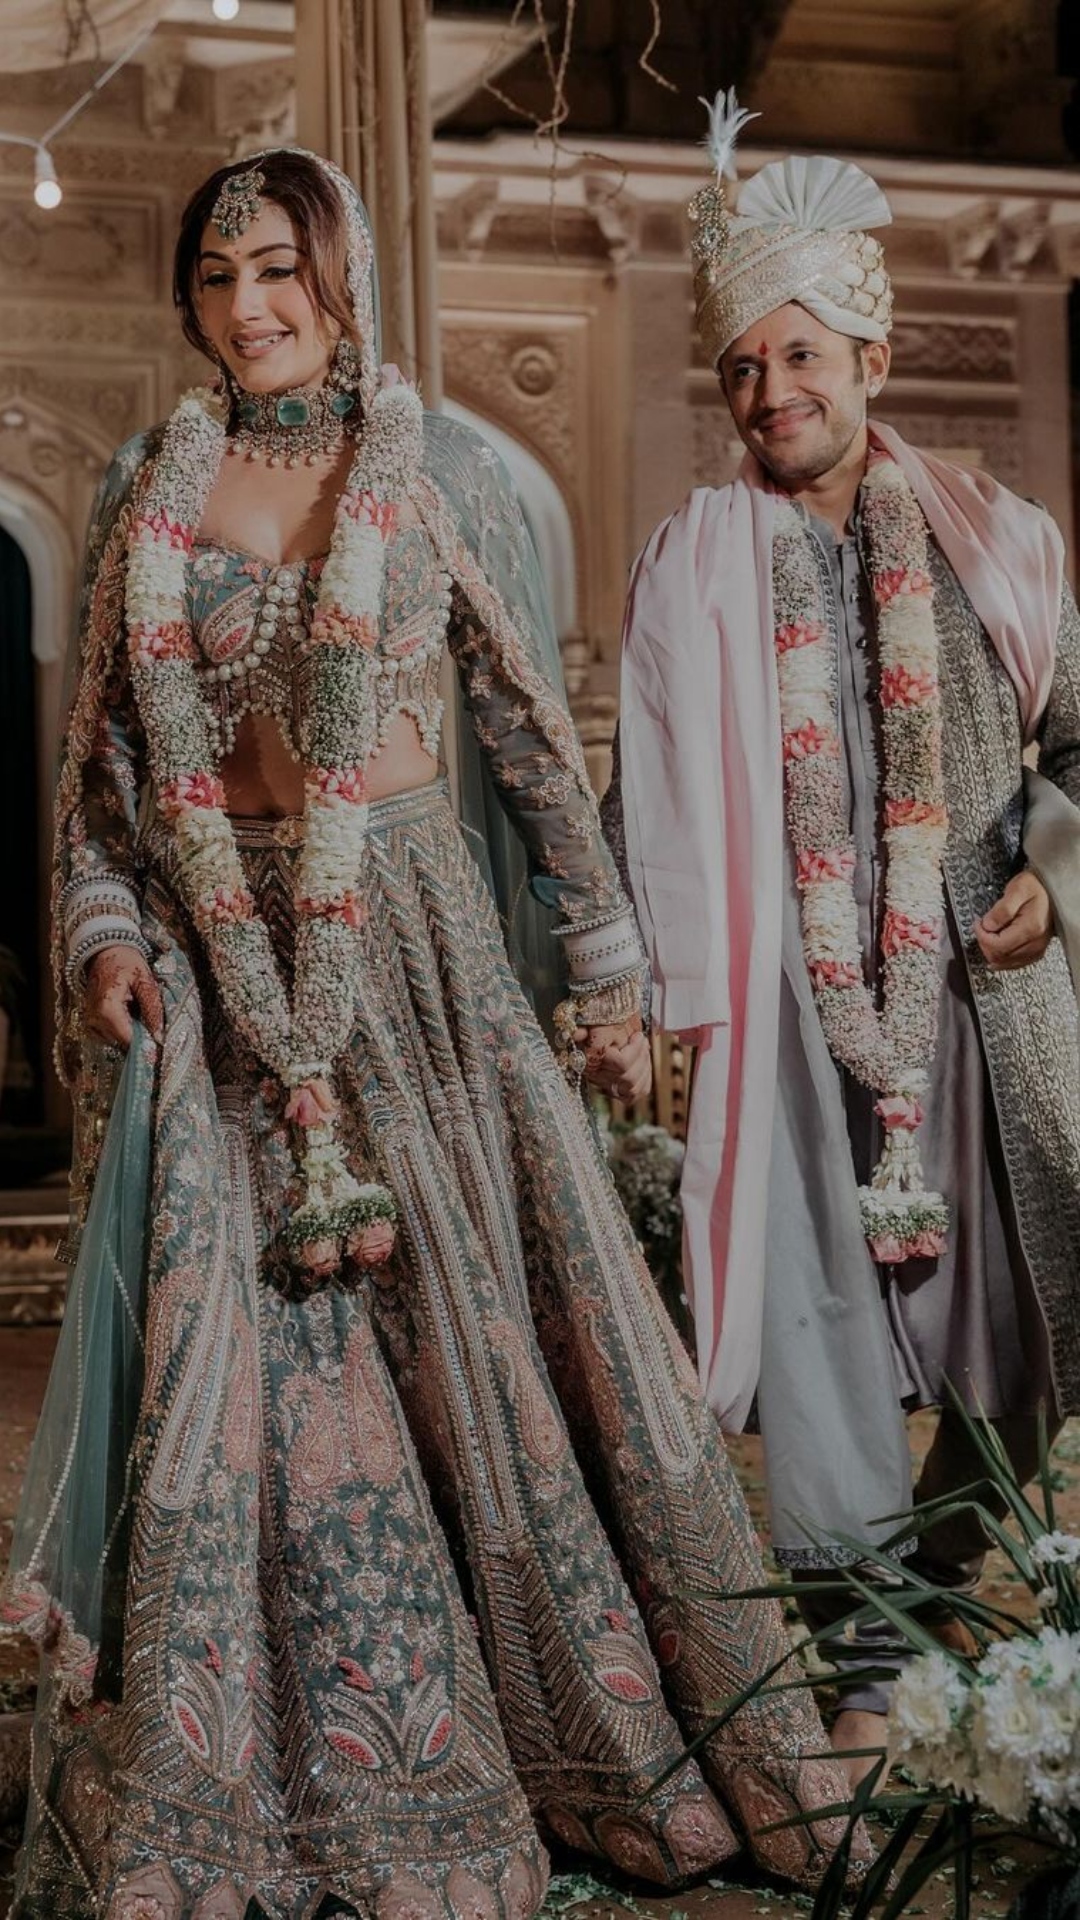 Surbhi Chandna shares wedding pictures with husband Karan Sharma